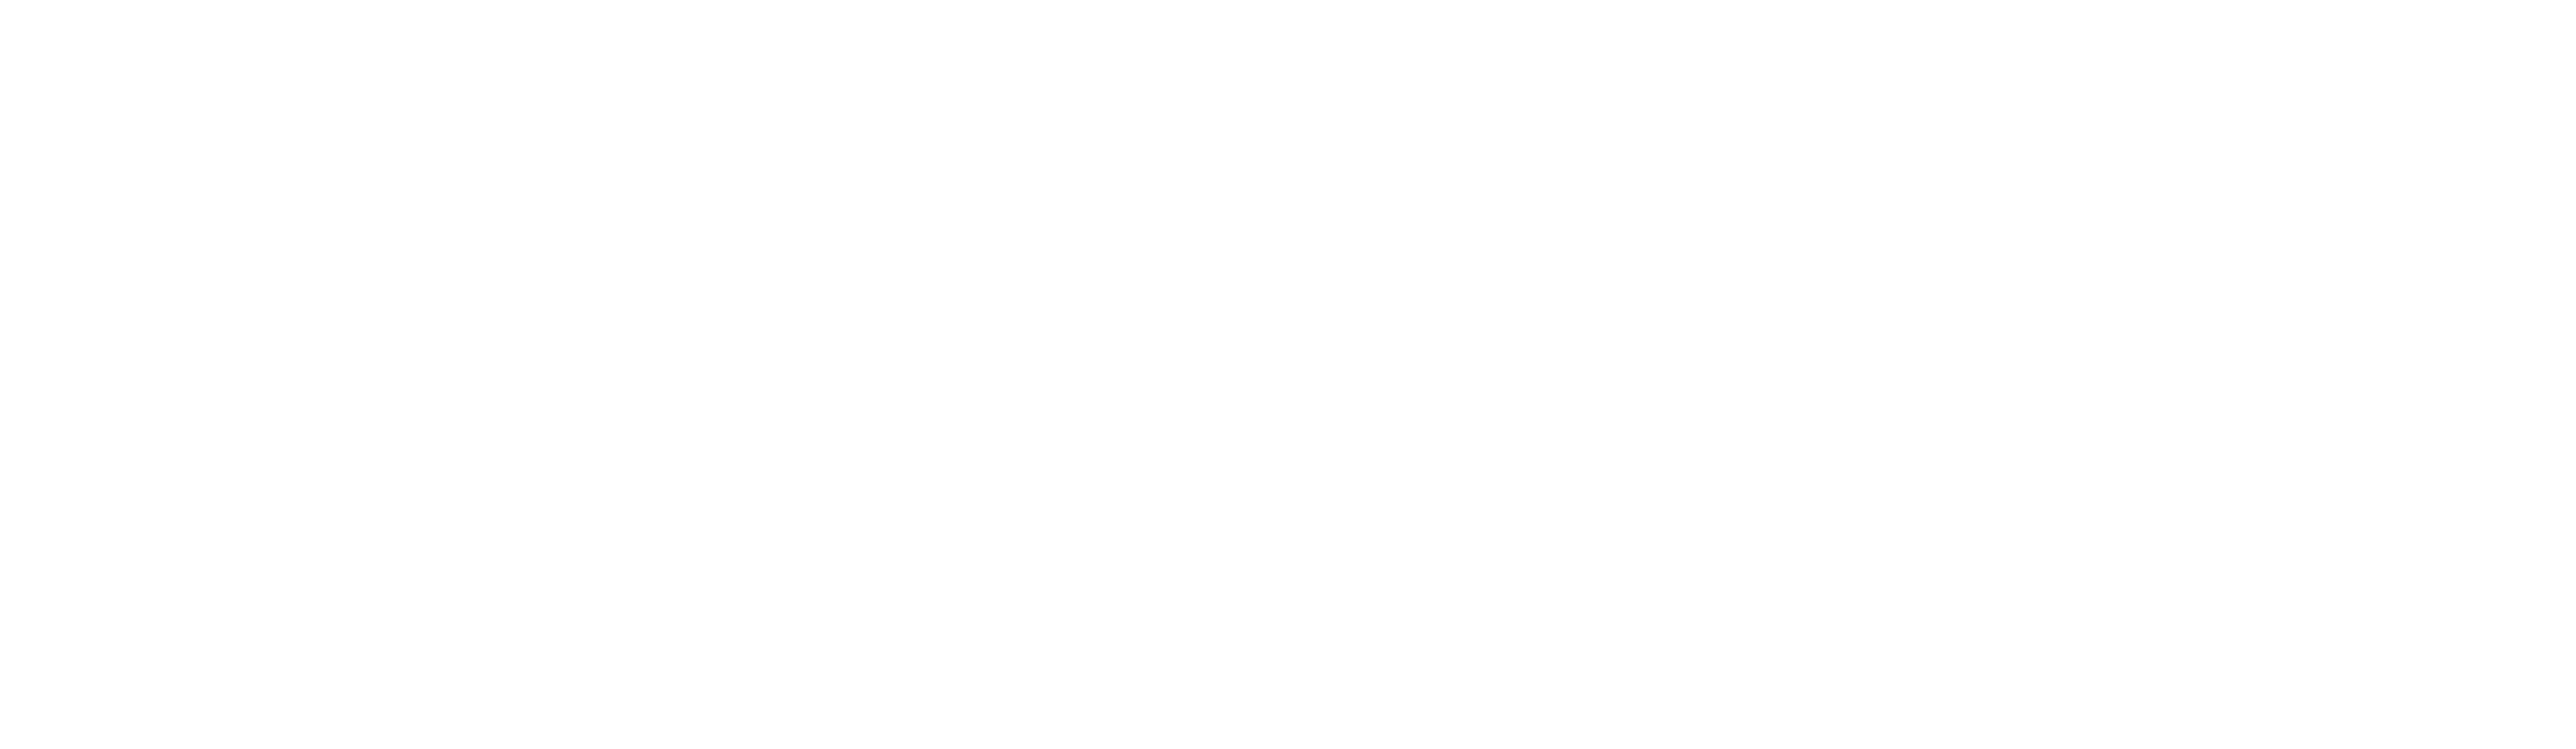 2022 c10 nationals title image